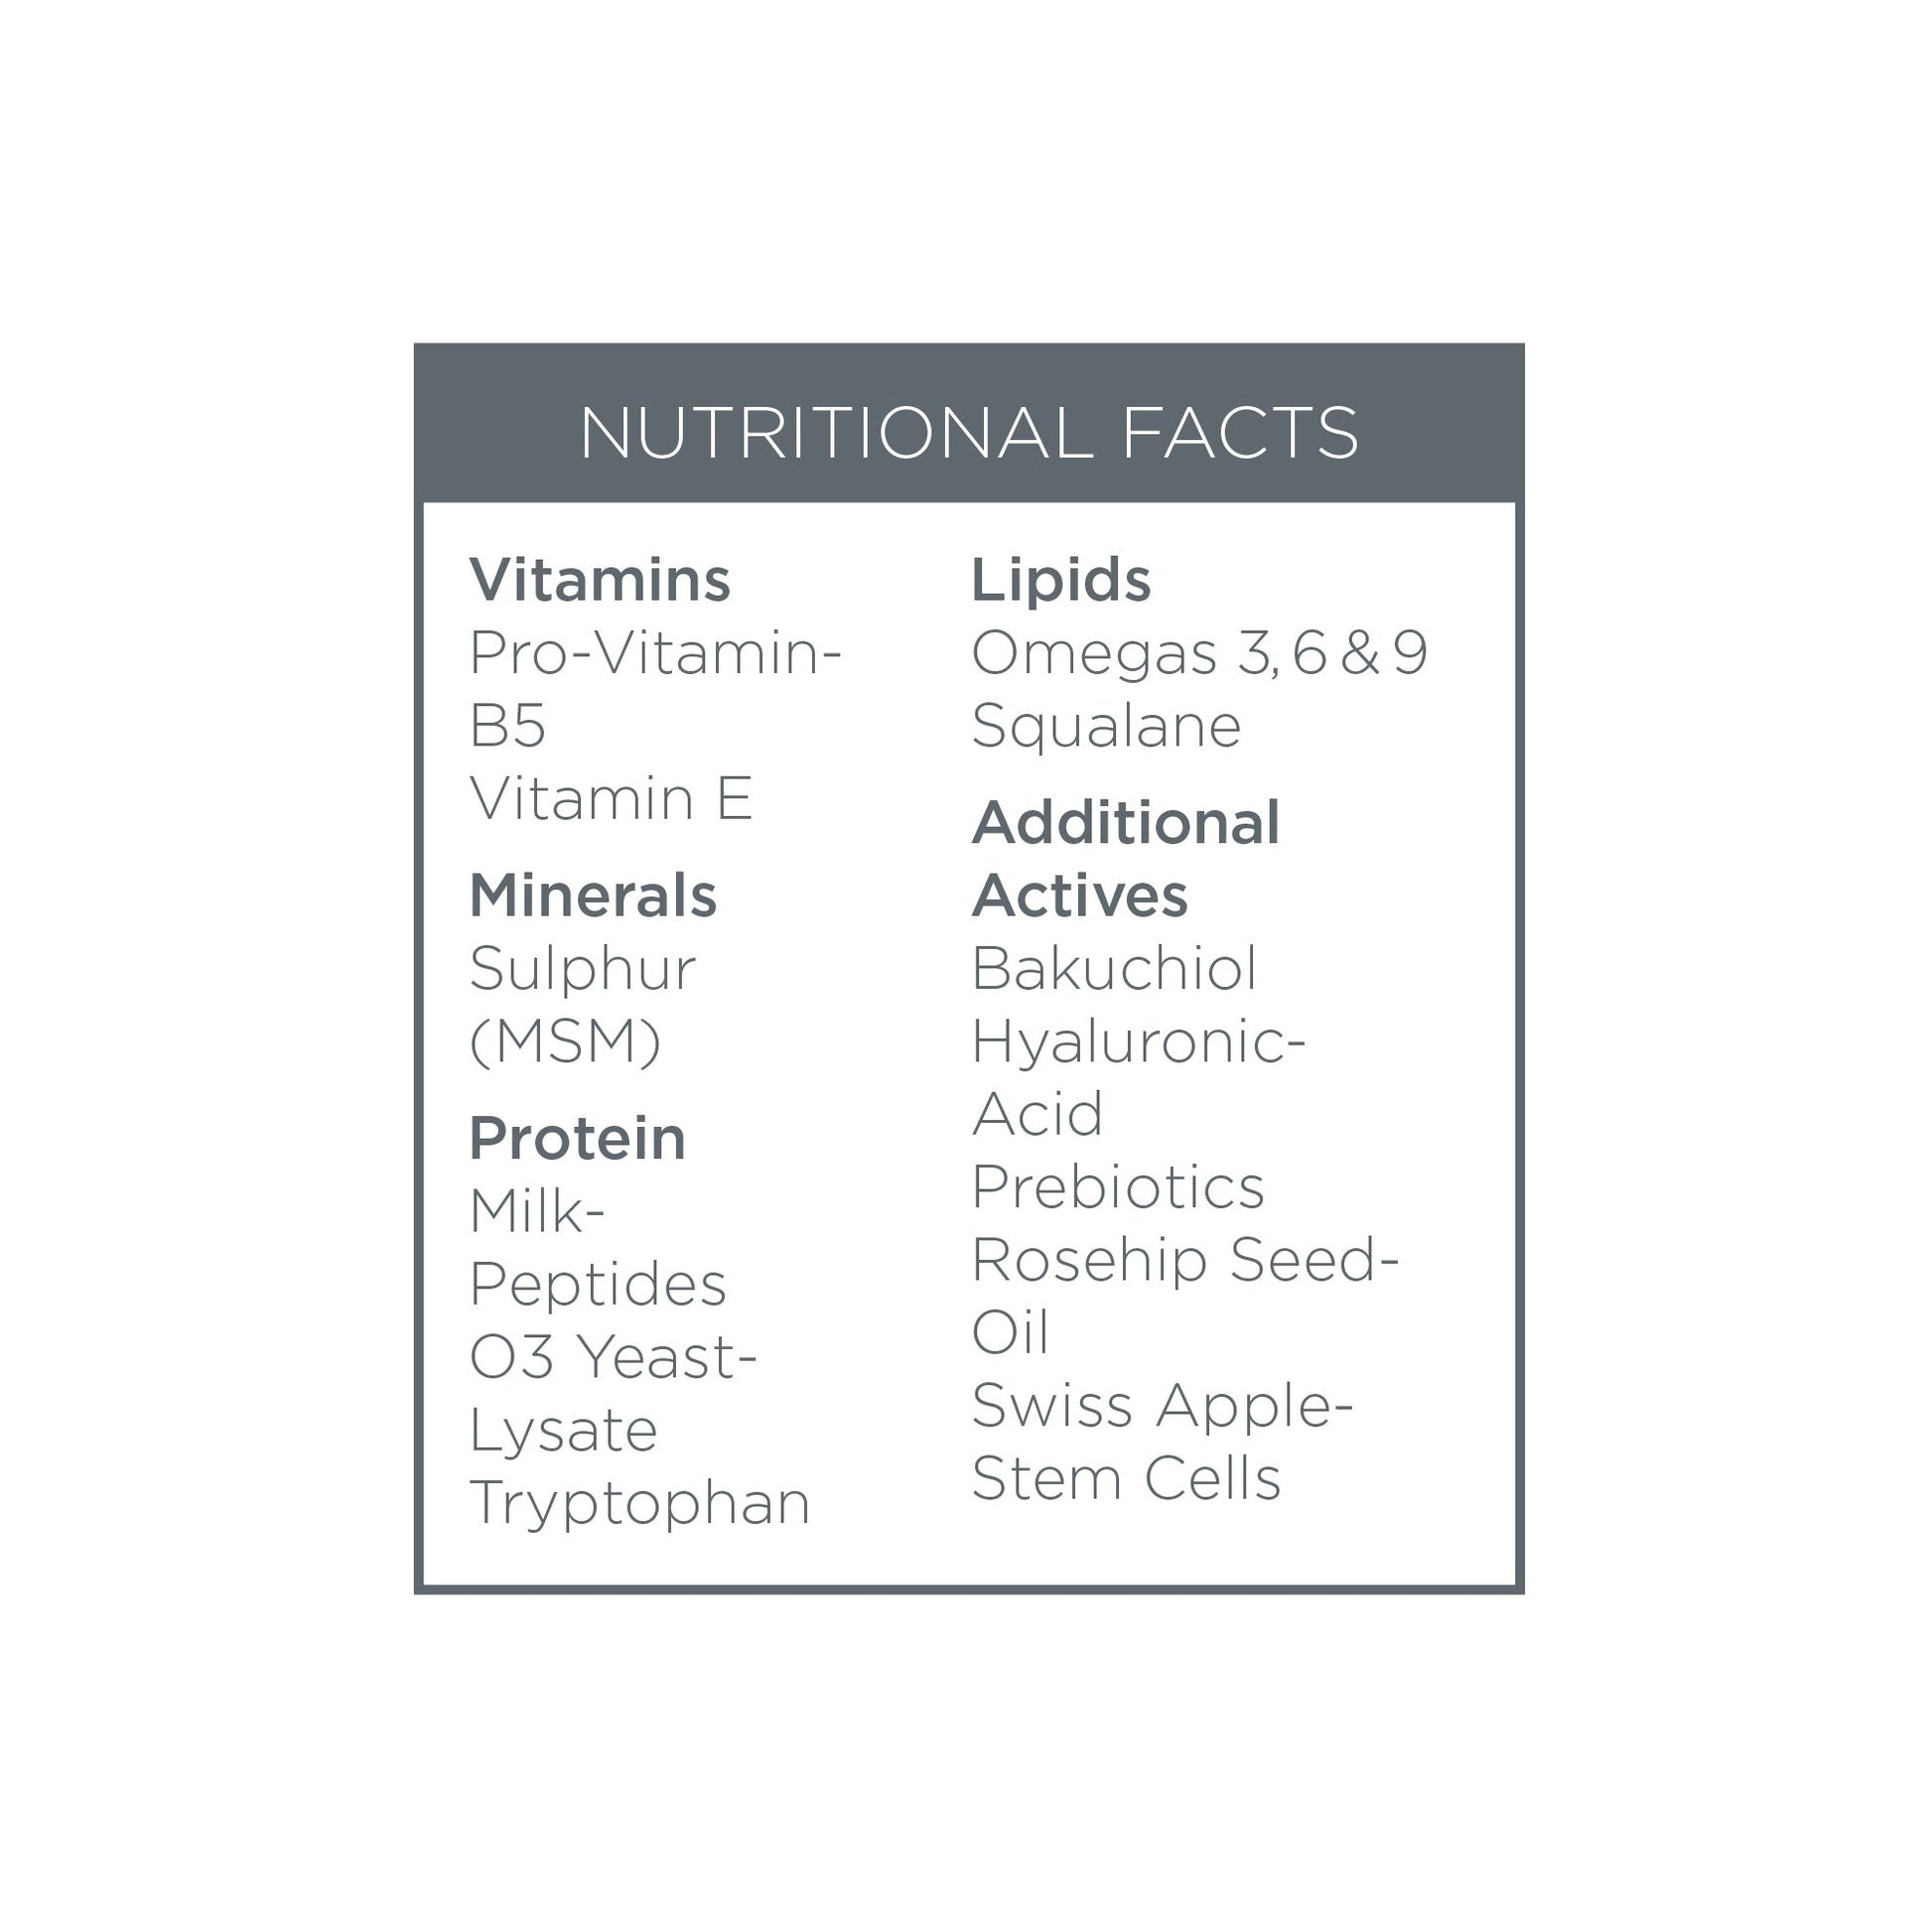 Nutritional Facts. Vitamins: Pro-Vitamin B5 & E. Minerals: MSM (Sulphur). Proteins: Milk peptides, 03 Yeast Lysate, Tryptophan. Lipids: Omega 3, 6 & 9, Squalane. Additional Actives: Bakuchiol, Hyaluronic Acid, Prebiotics, Rosehip Seed Oil, Swiss Apple Stem Cells. 